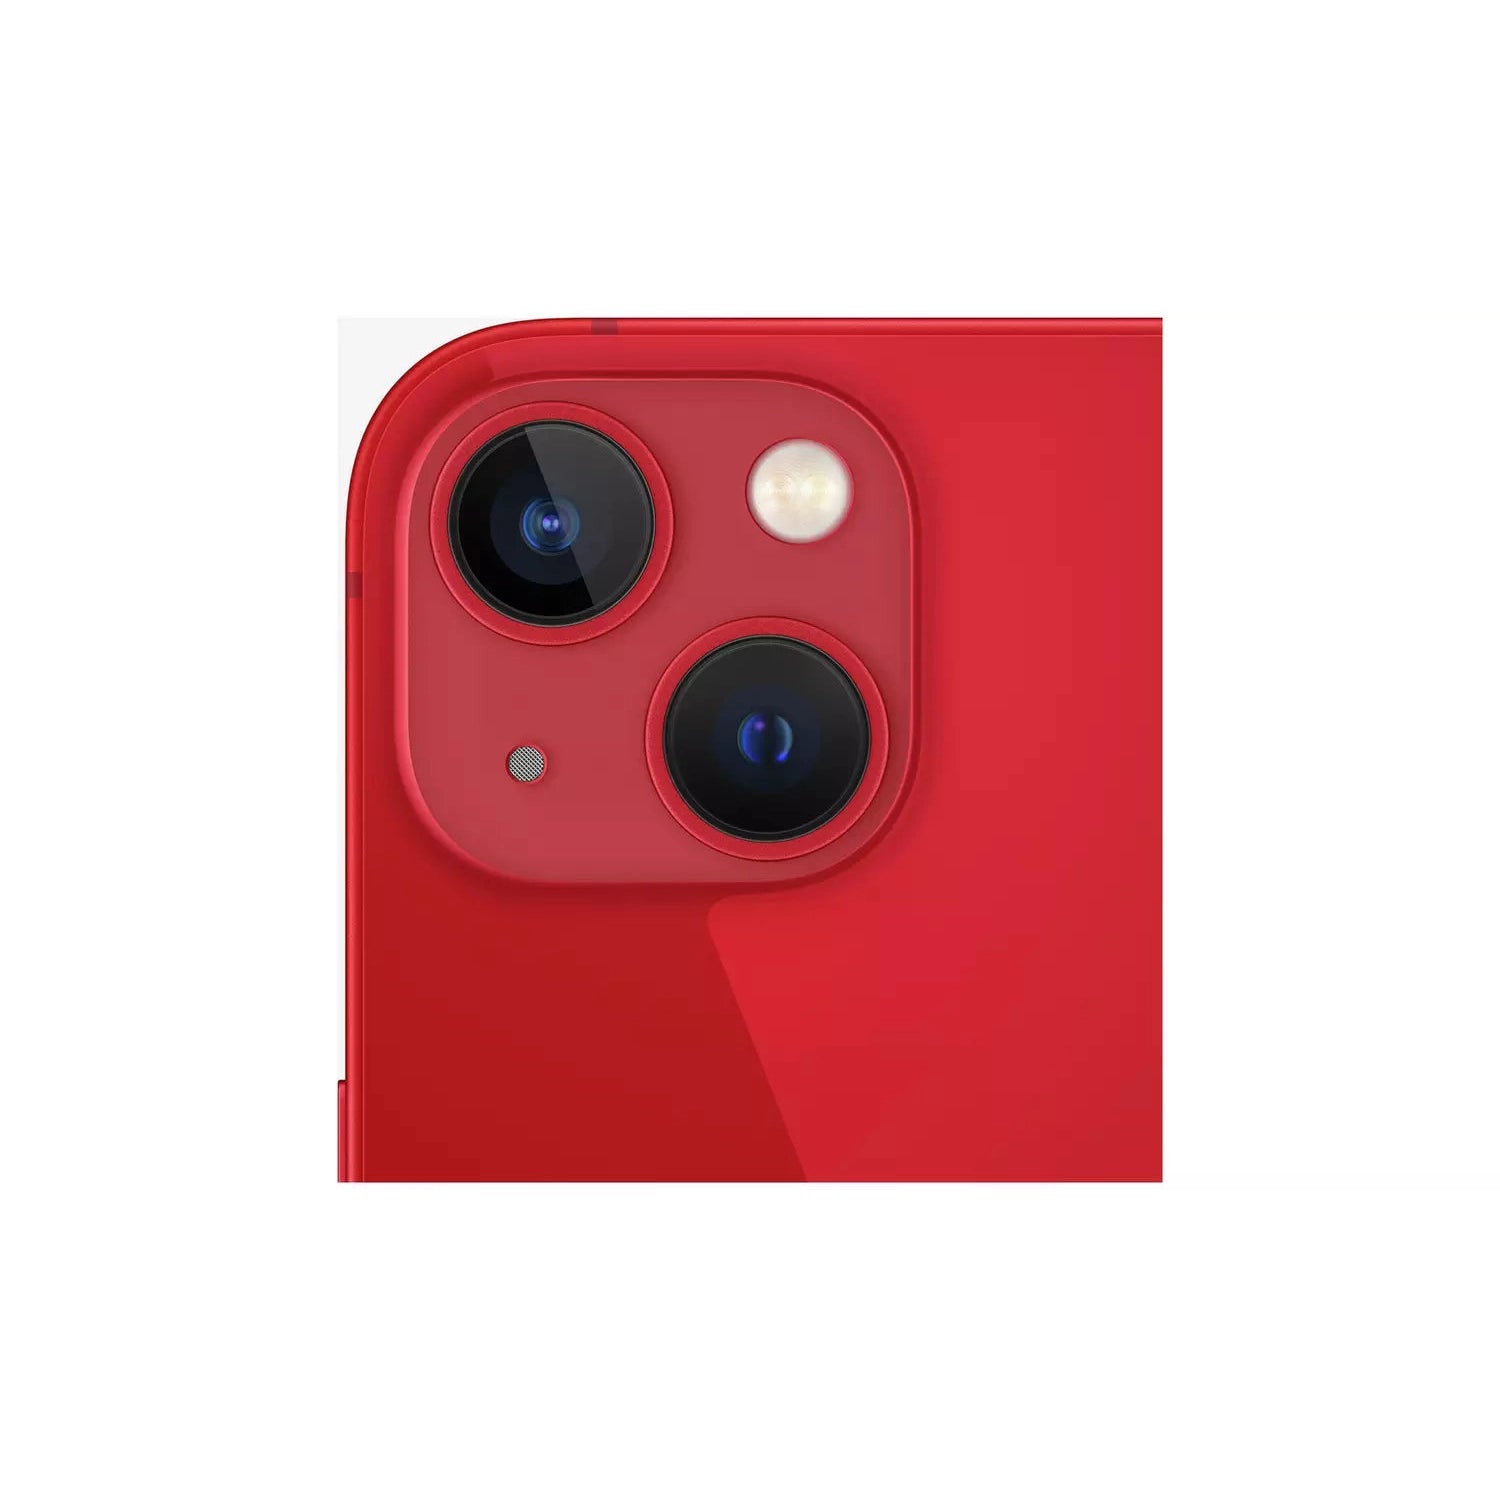 Apple iPhone 13 - 128 GB - RED